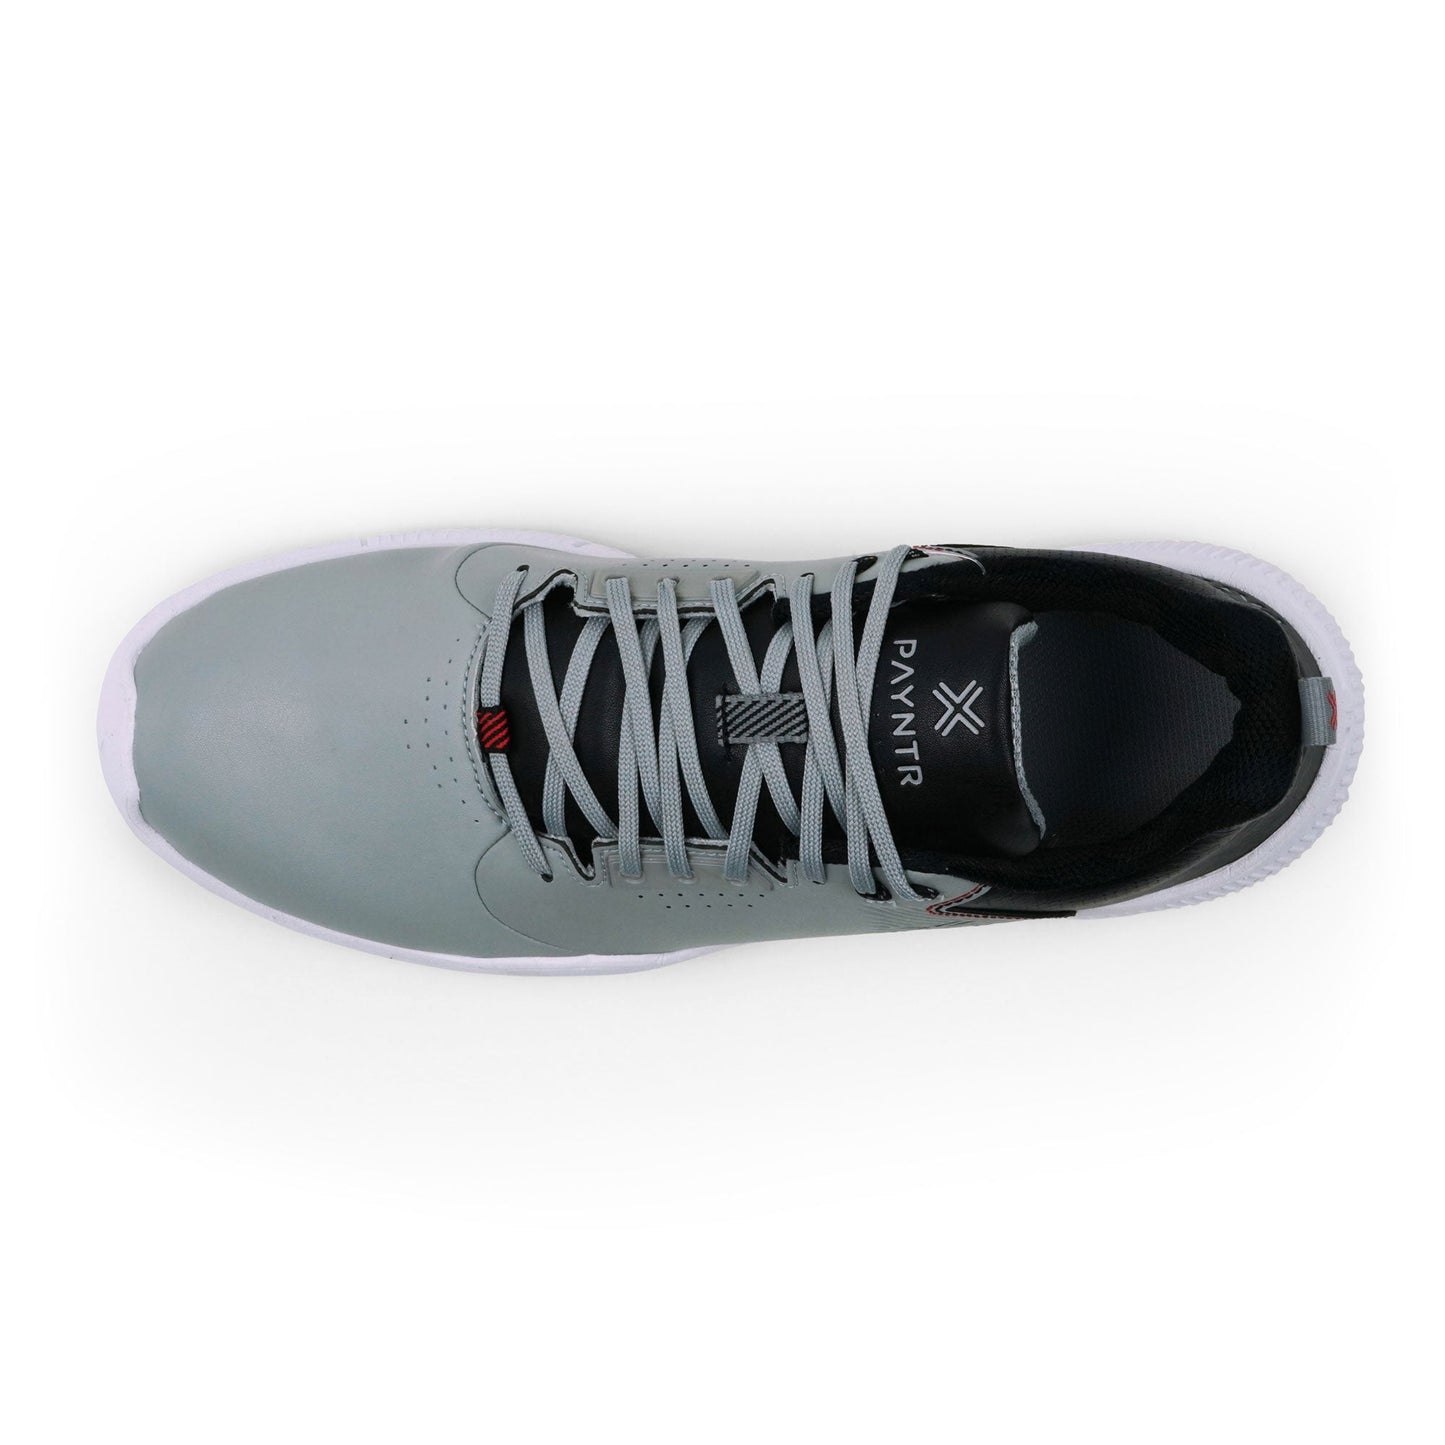 PAYNTR X-003 F Spikeless Golf Shoes (Grey/Black) - Top